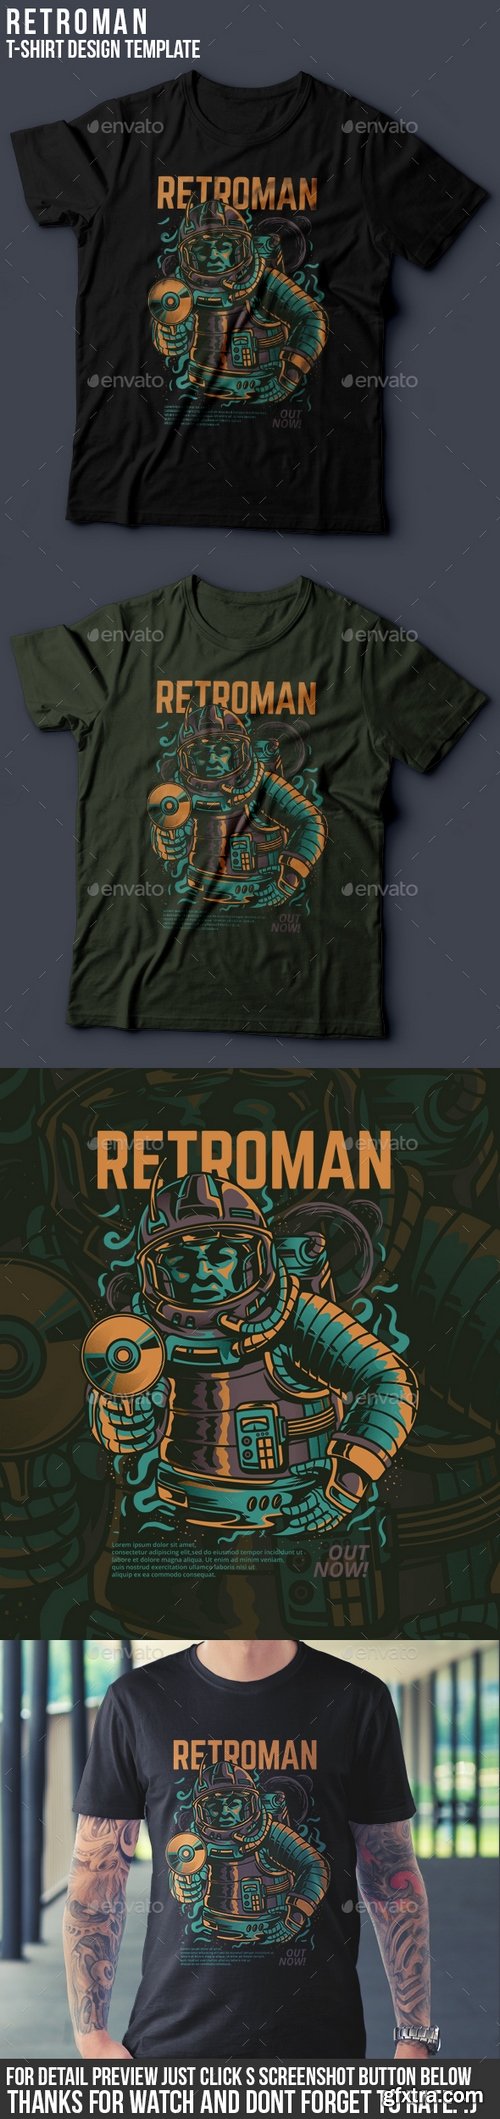 Graphicriver - Retroman T-Shirt Design 21055042